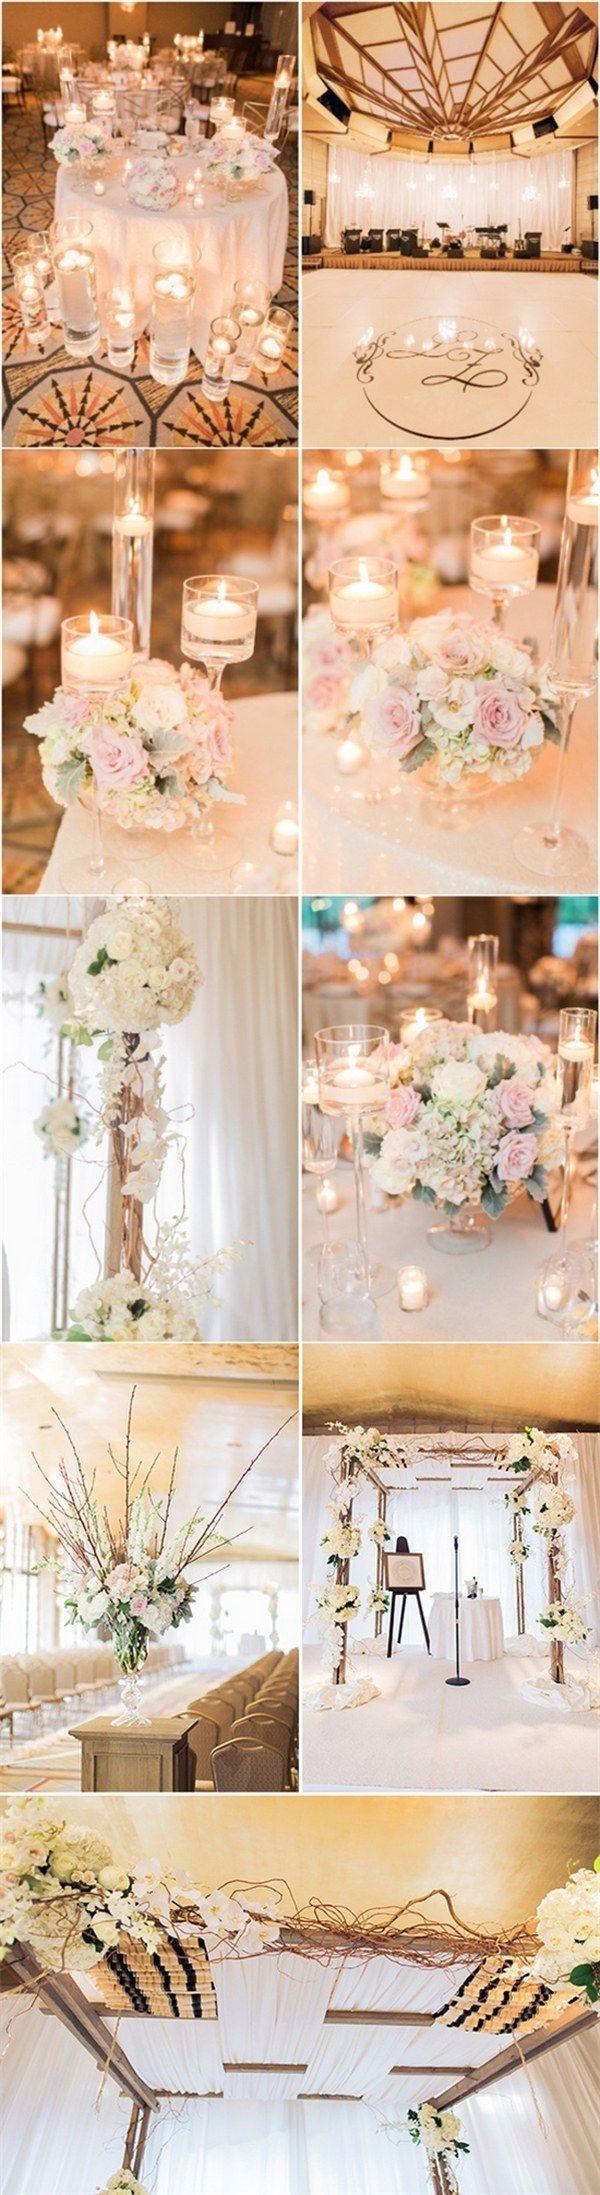 زفاف - Top 5 Romantic Fairytale Wedding Theme Ideas